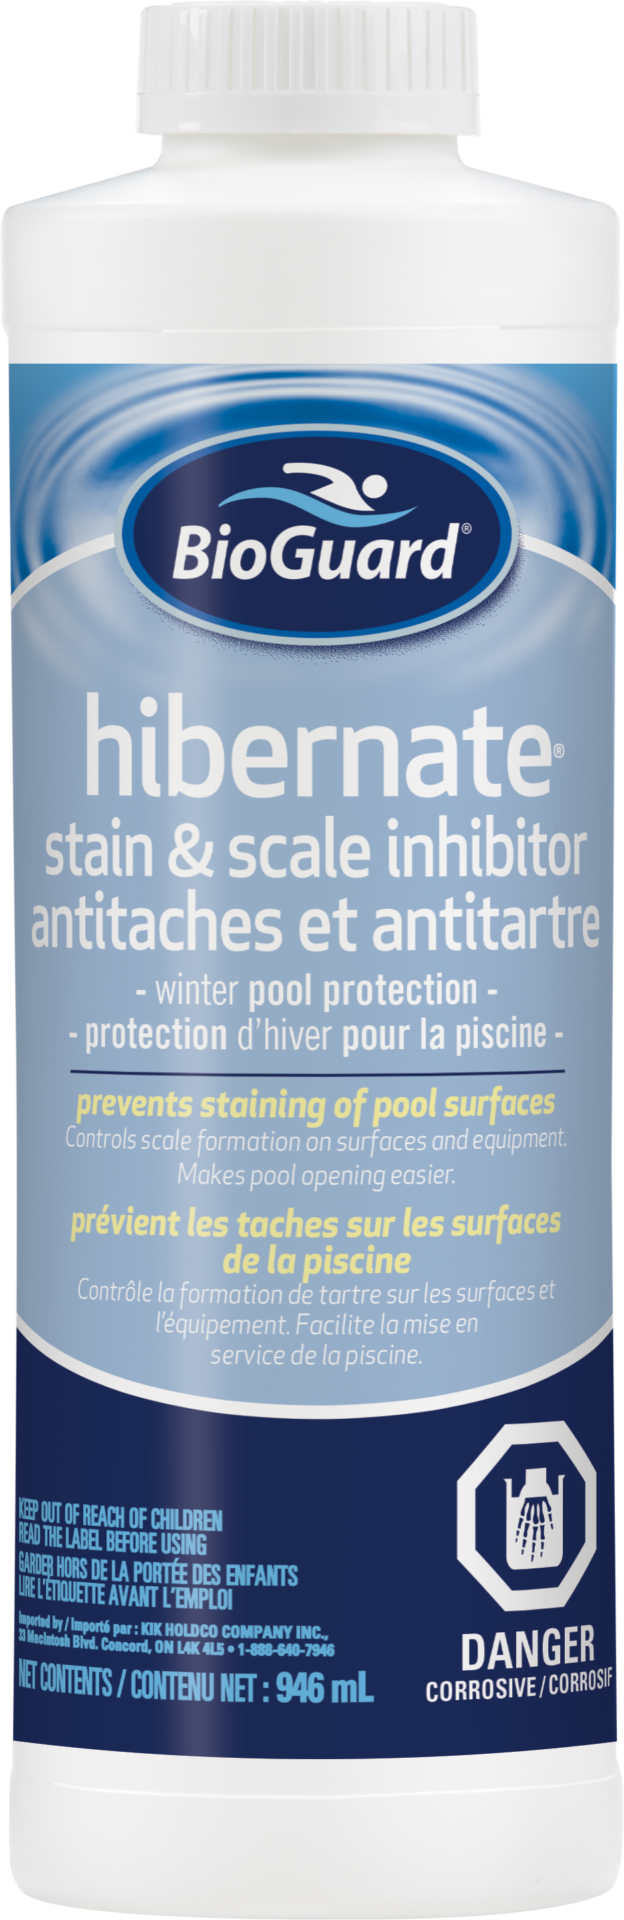 BioGuard Hibernate Stain Scale Inhibitor 946ml - HIBERNATE STAIN & SCALE - 946ml